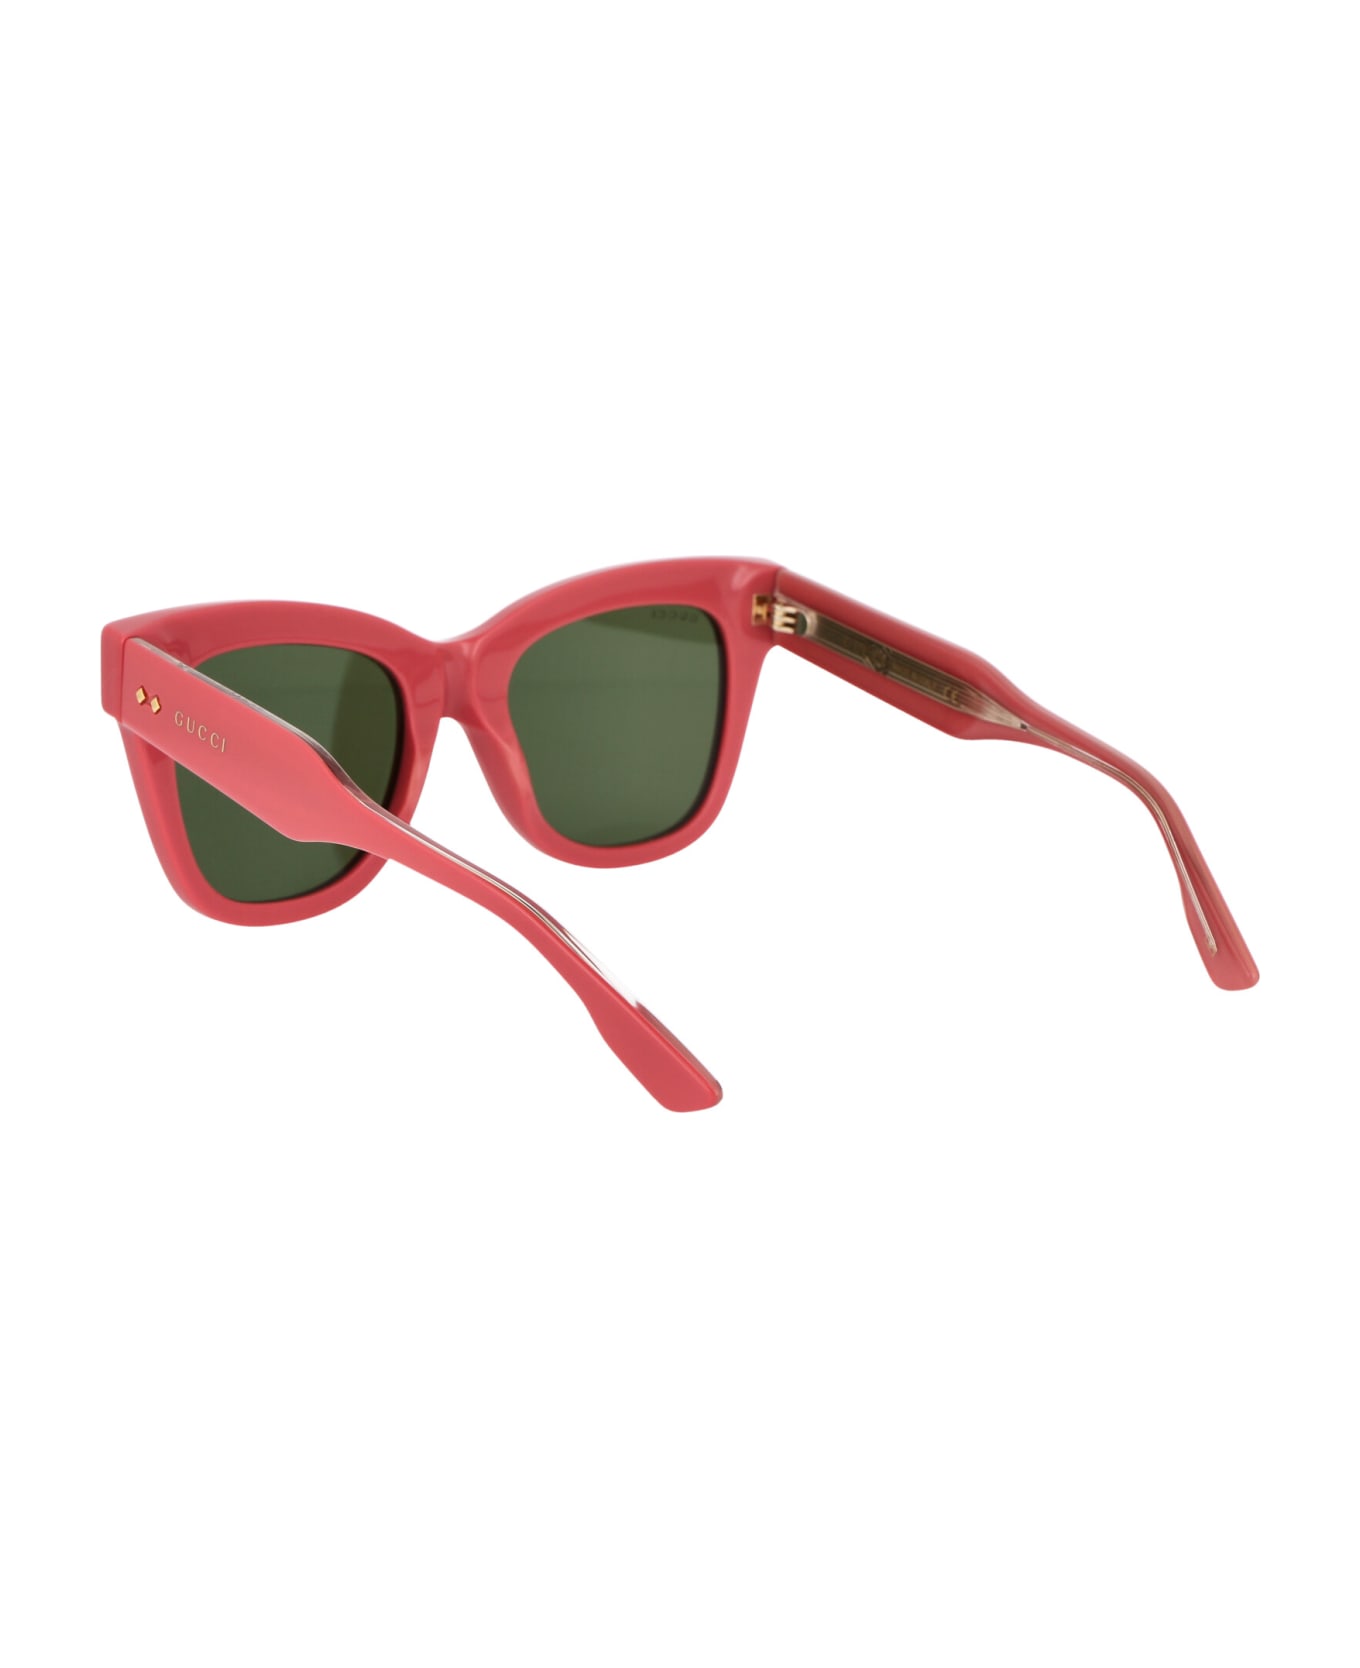 Gucci Eyewear Gg1082s Sunglasses - 004 PINK PINK GREEN サングラス